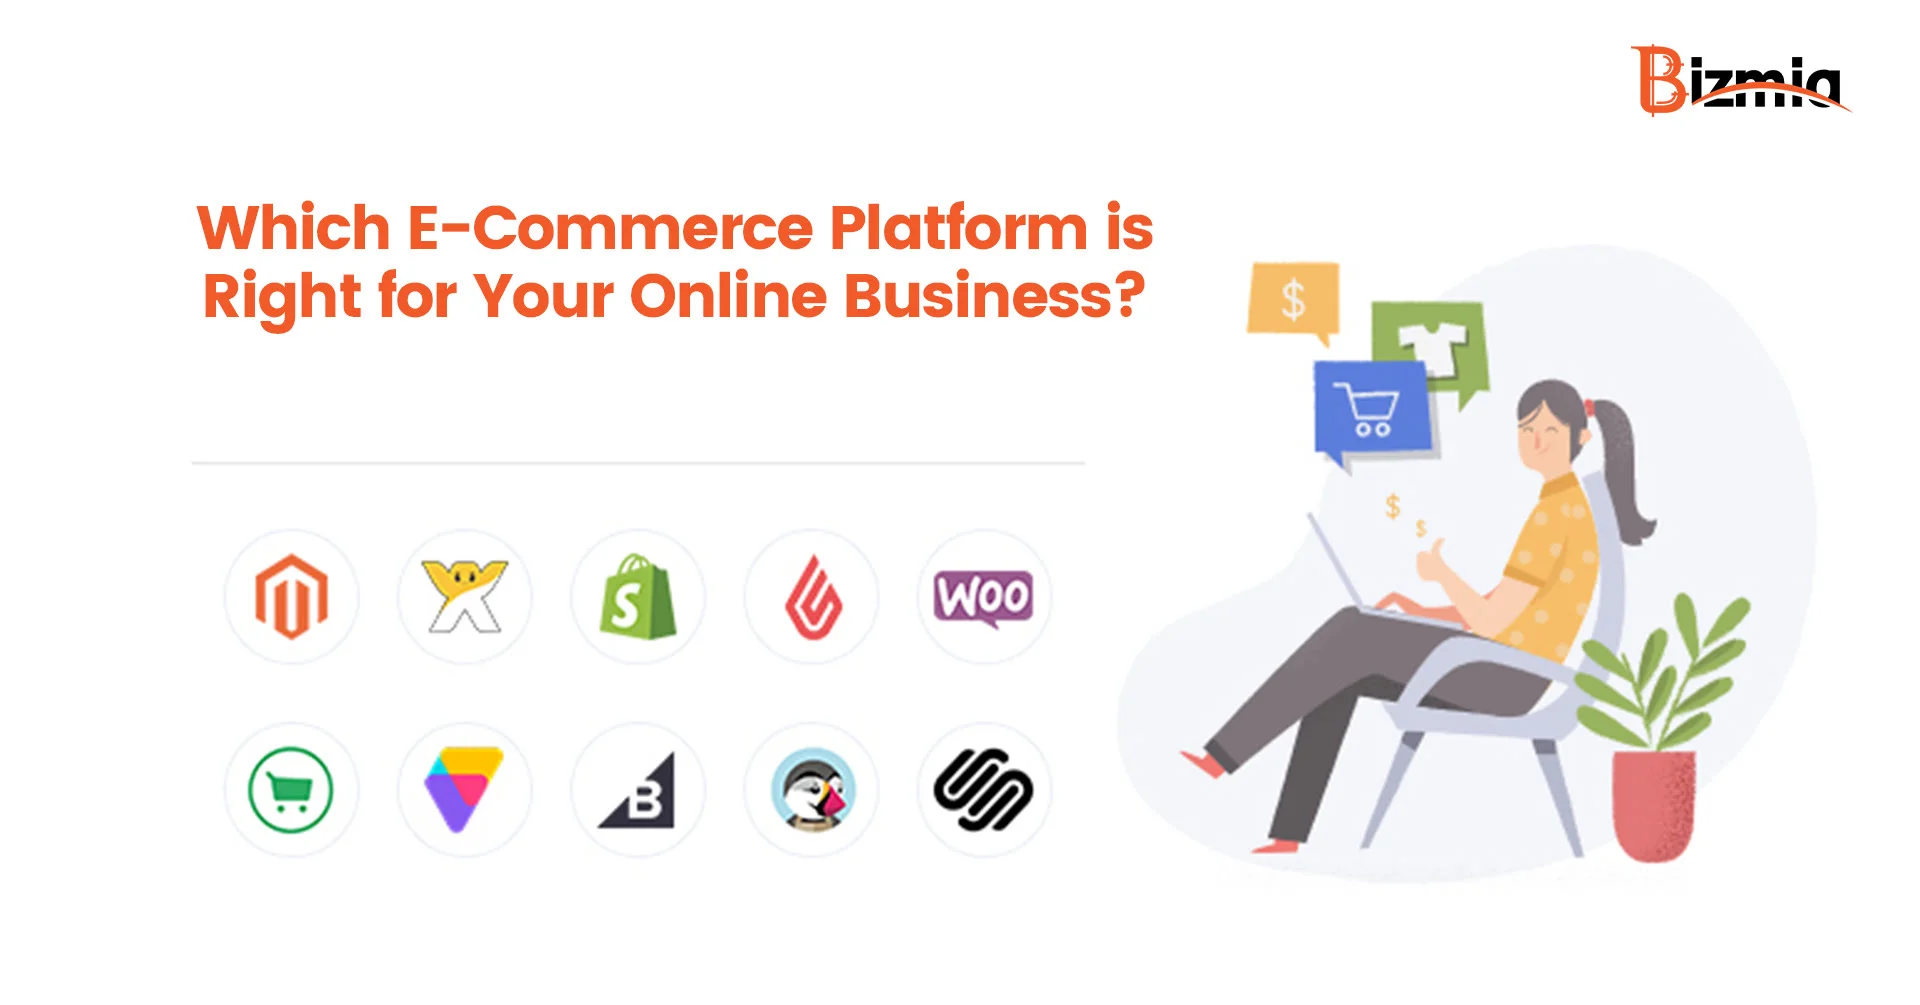 eCommerce platform